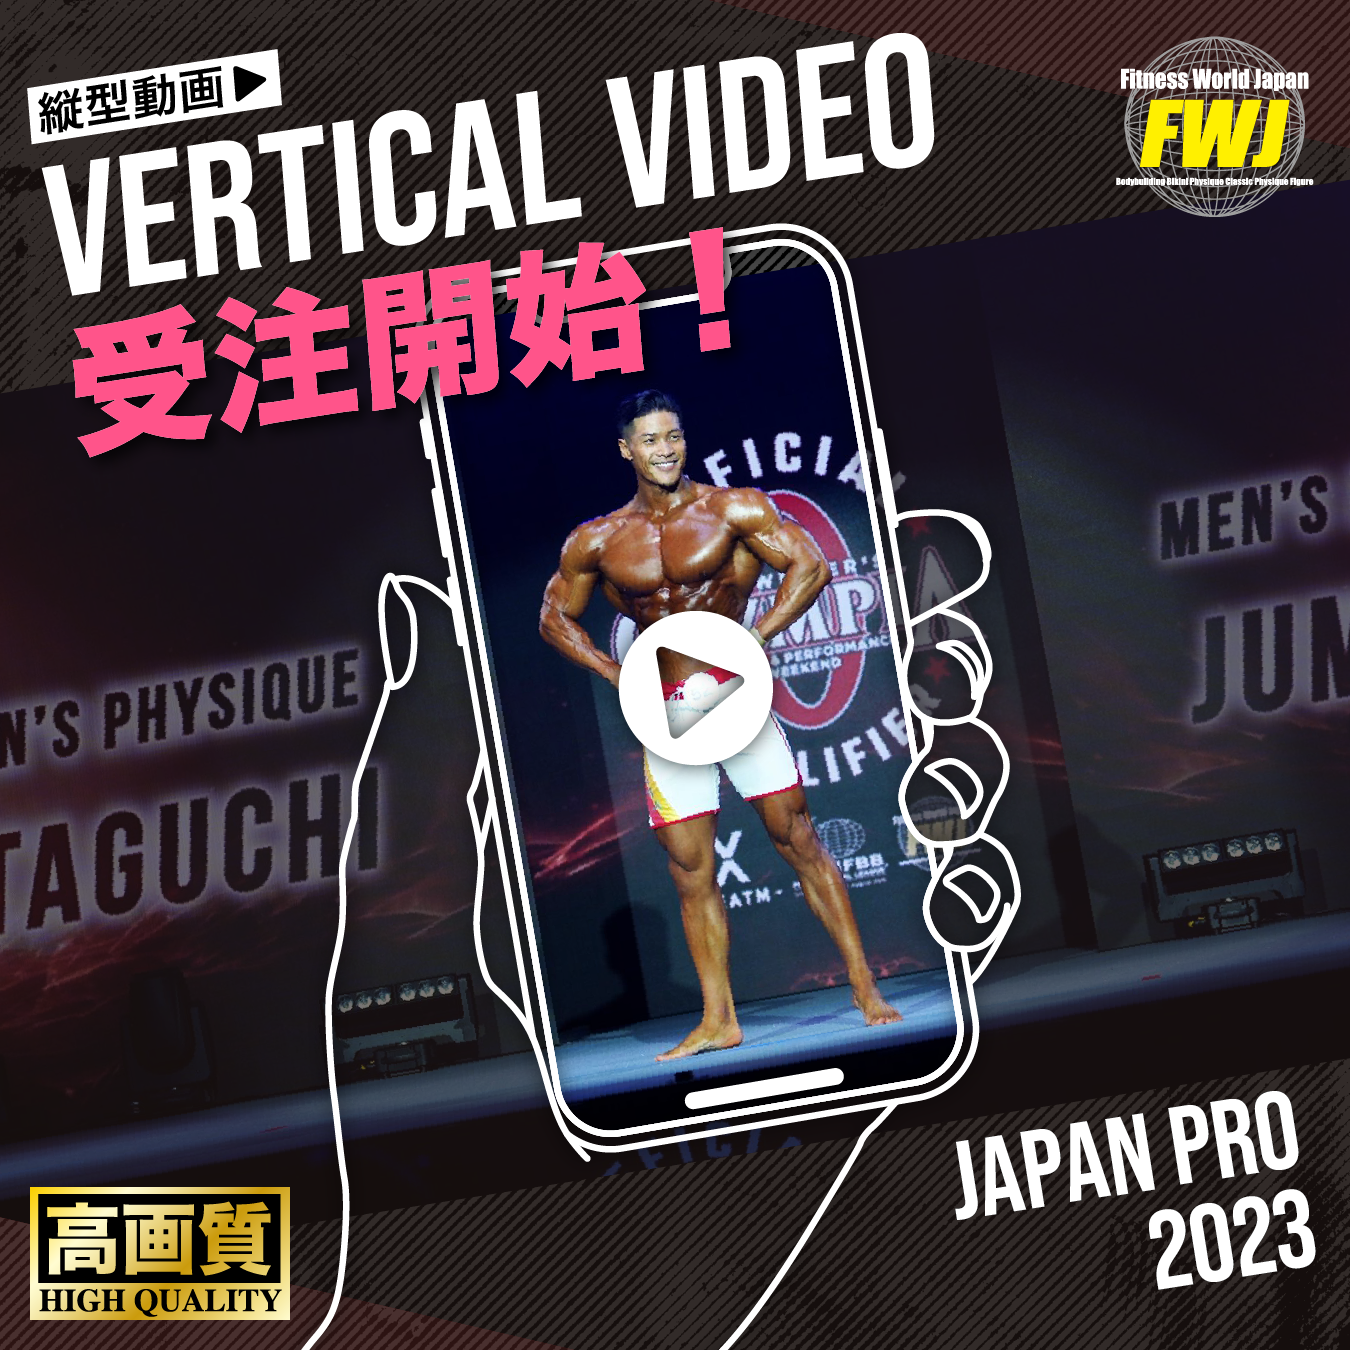 2023.11.26 Japan Pro Posing Routine Vertical Video